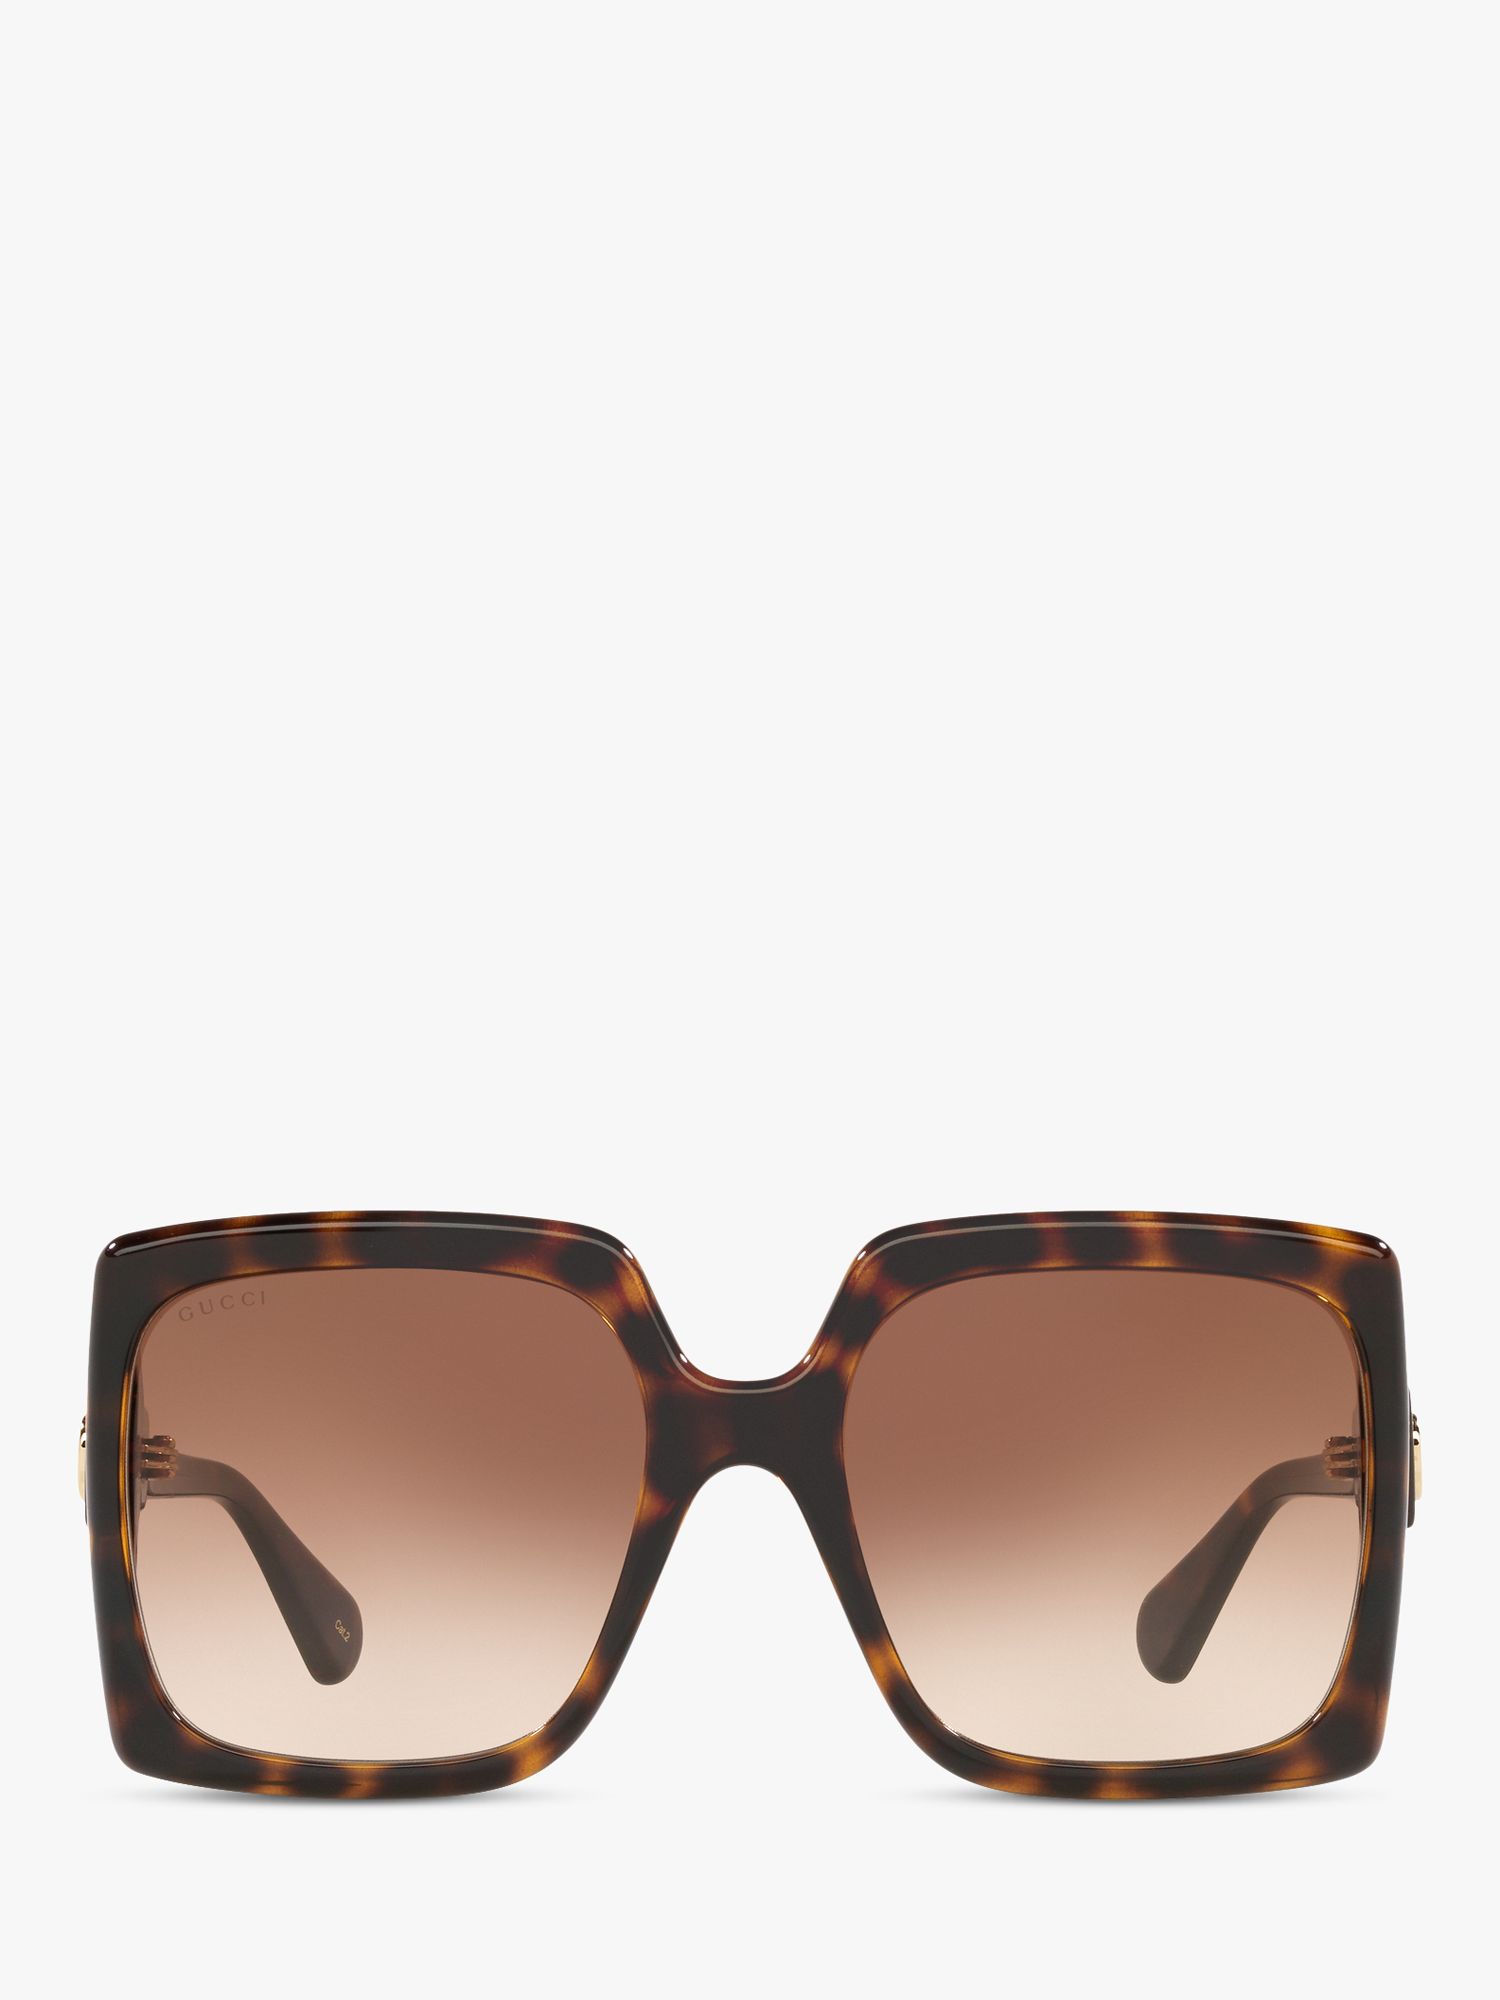 Gucci GG0876S Women's Chunky Square Sunglasses, Tortoise/Brown Gradient ...